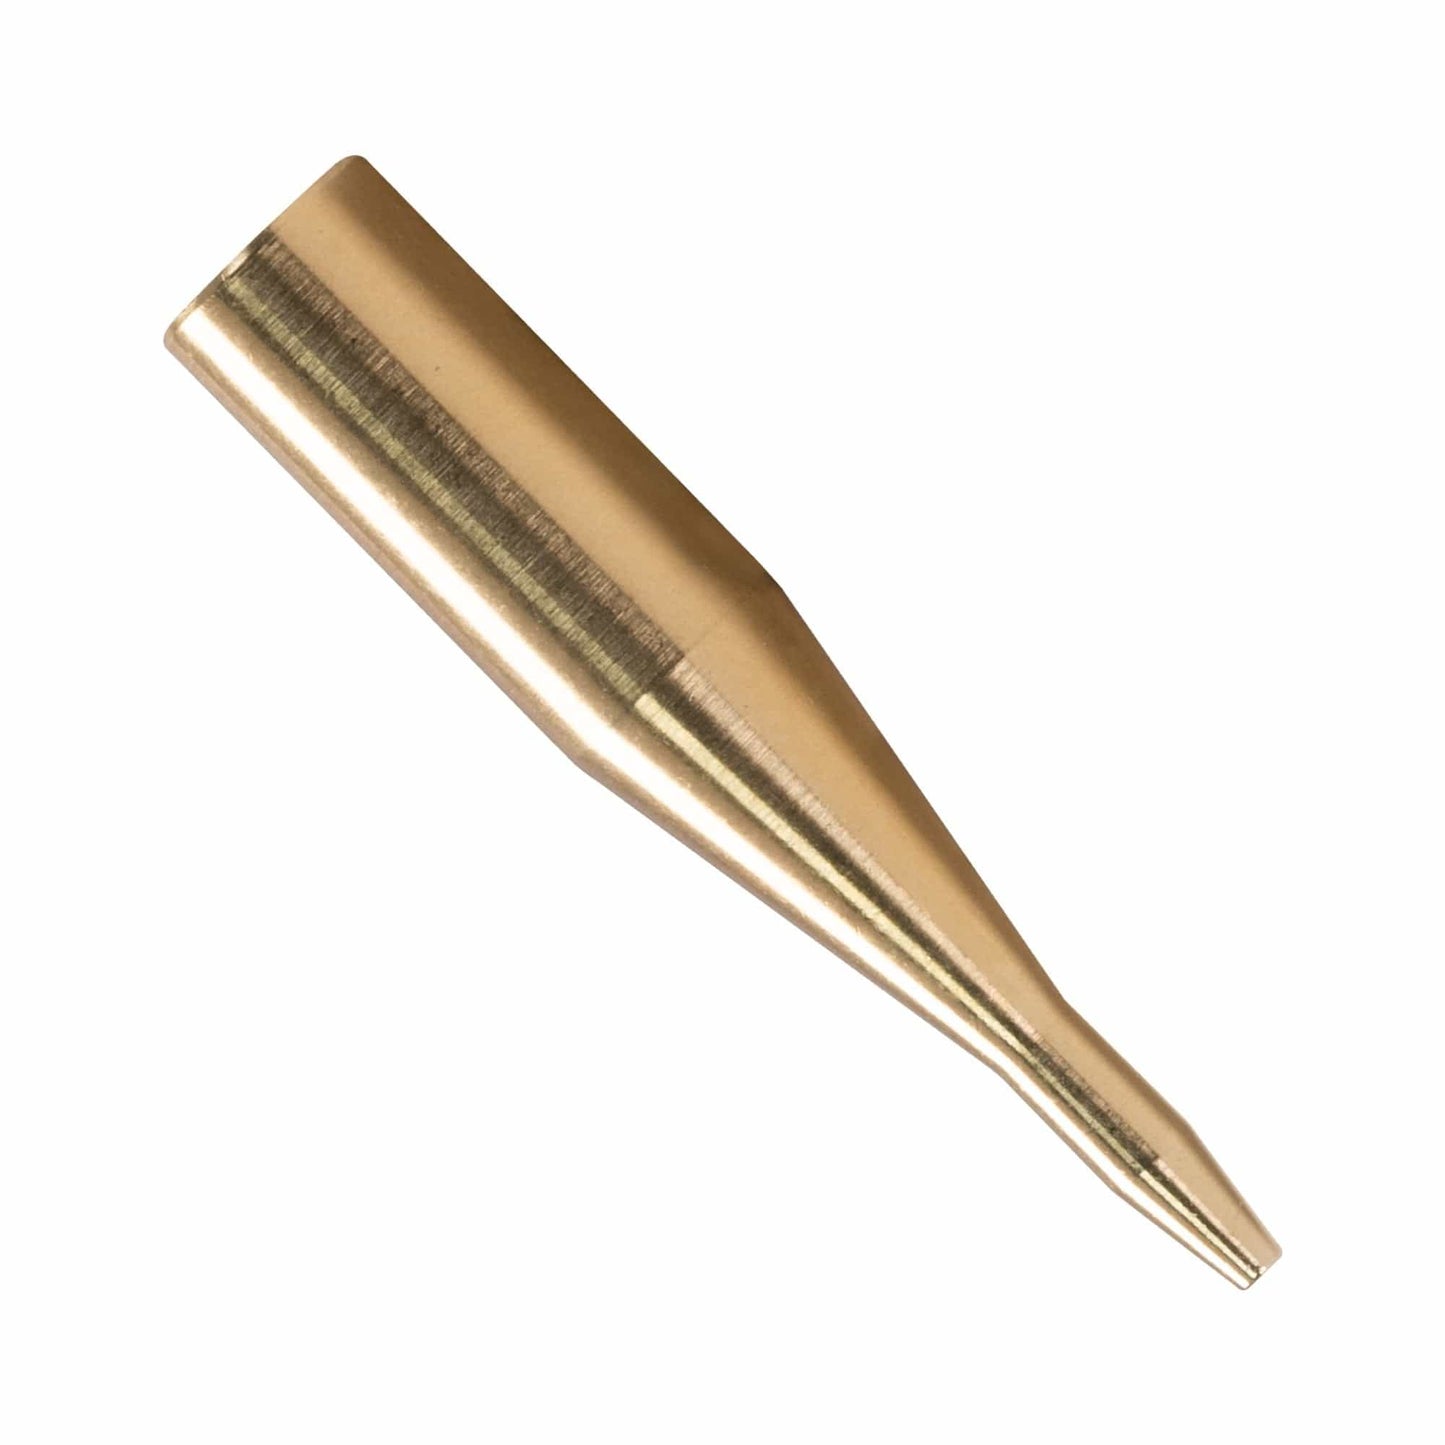 Stem Accessories - O Ring Applicator - Brass